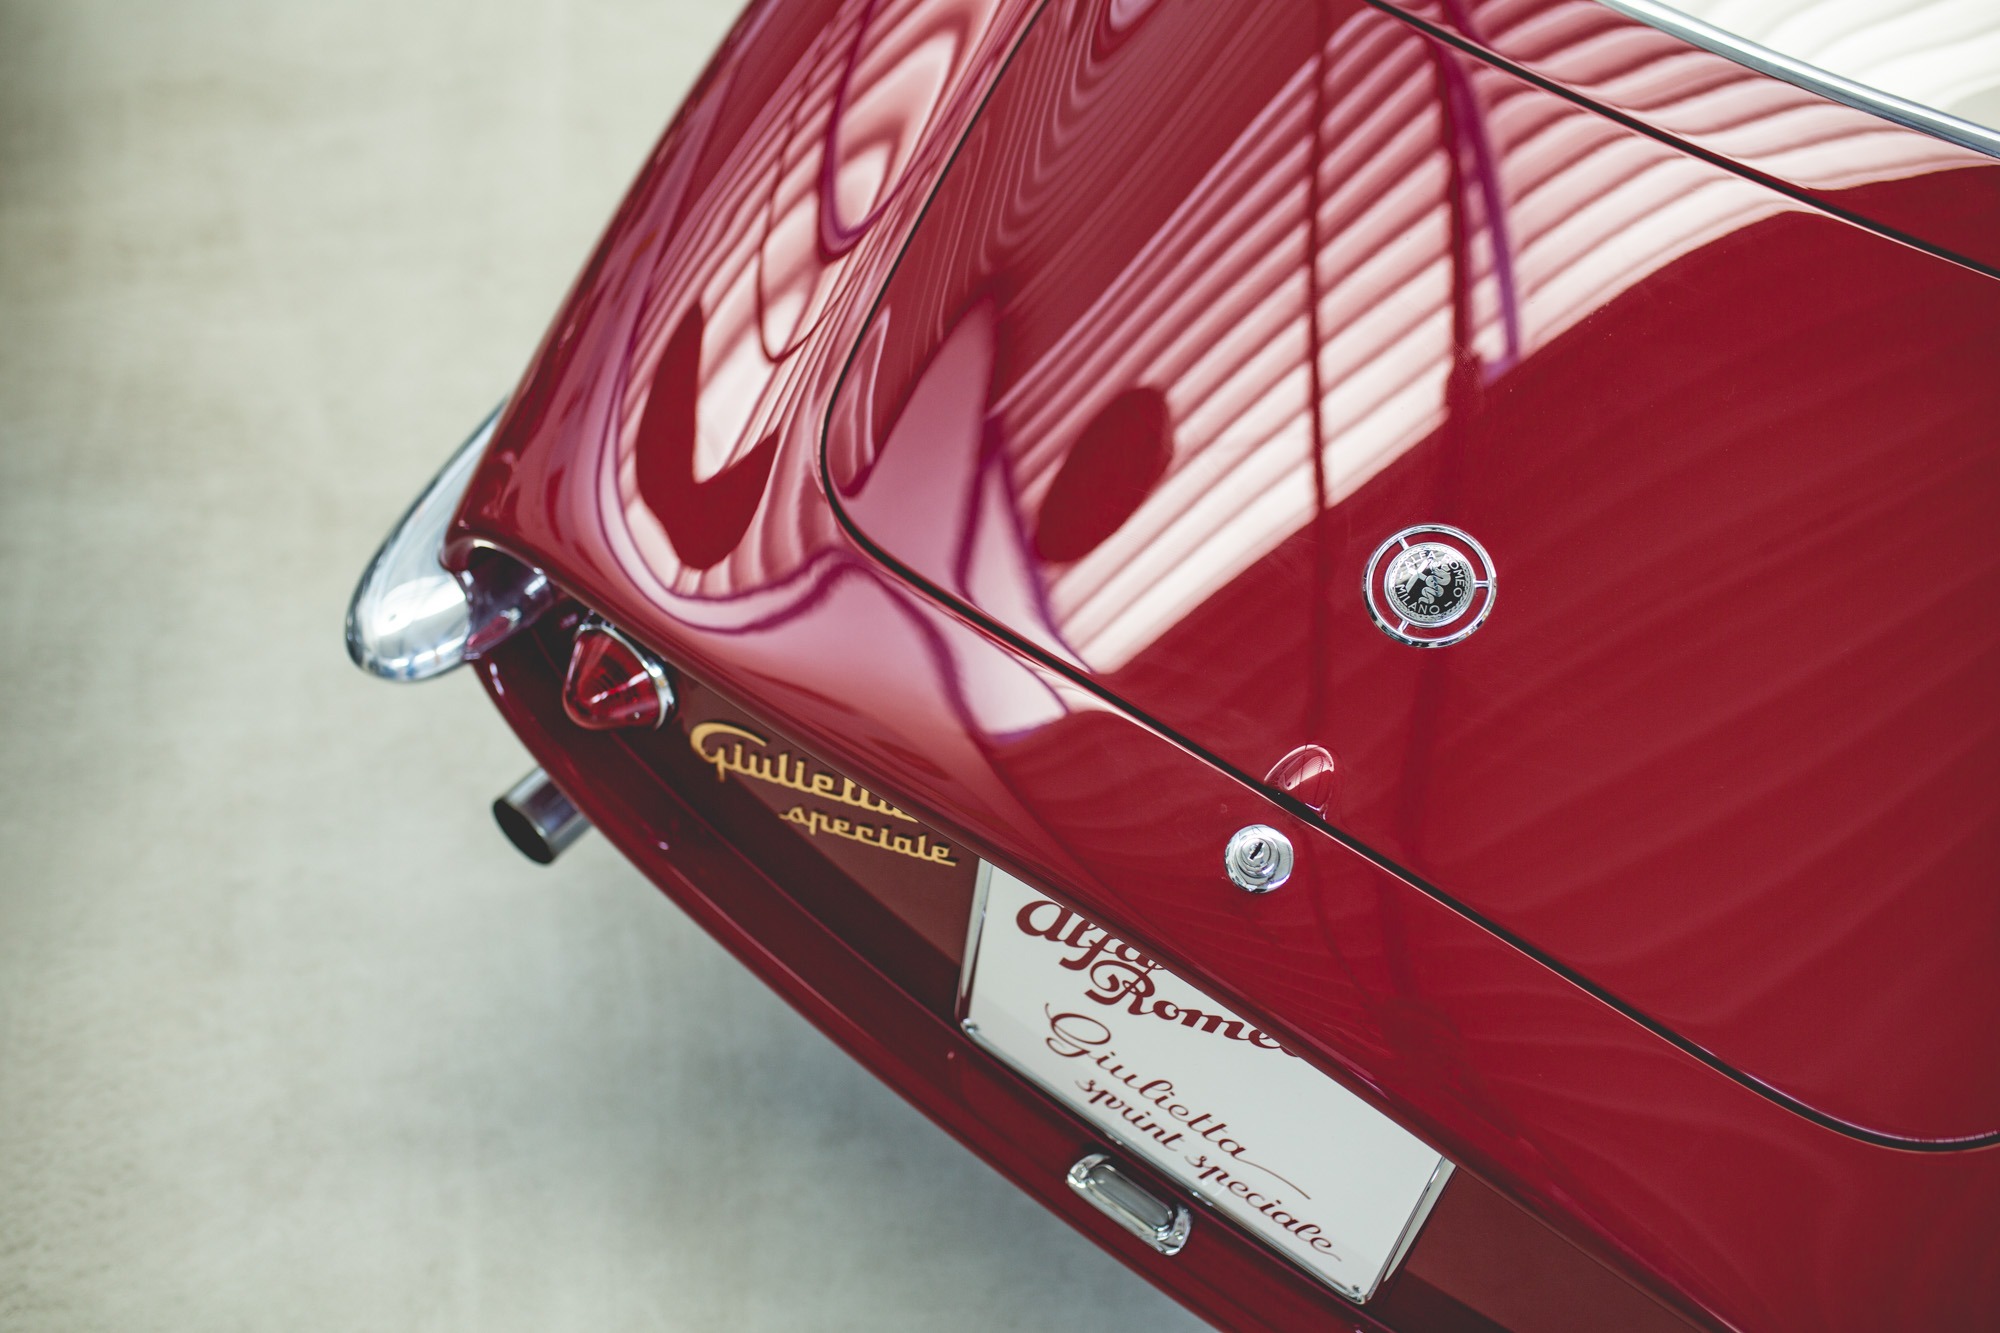 Alfa Romeo - Giullietta Speciale